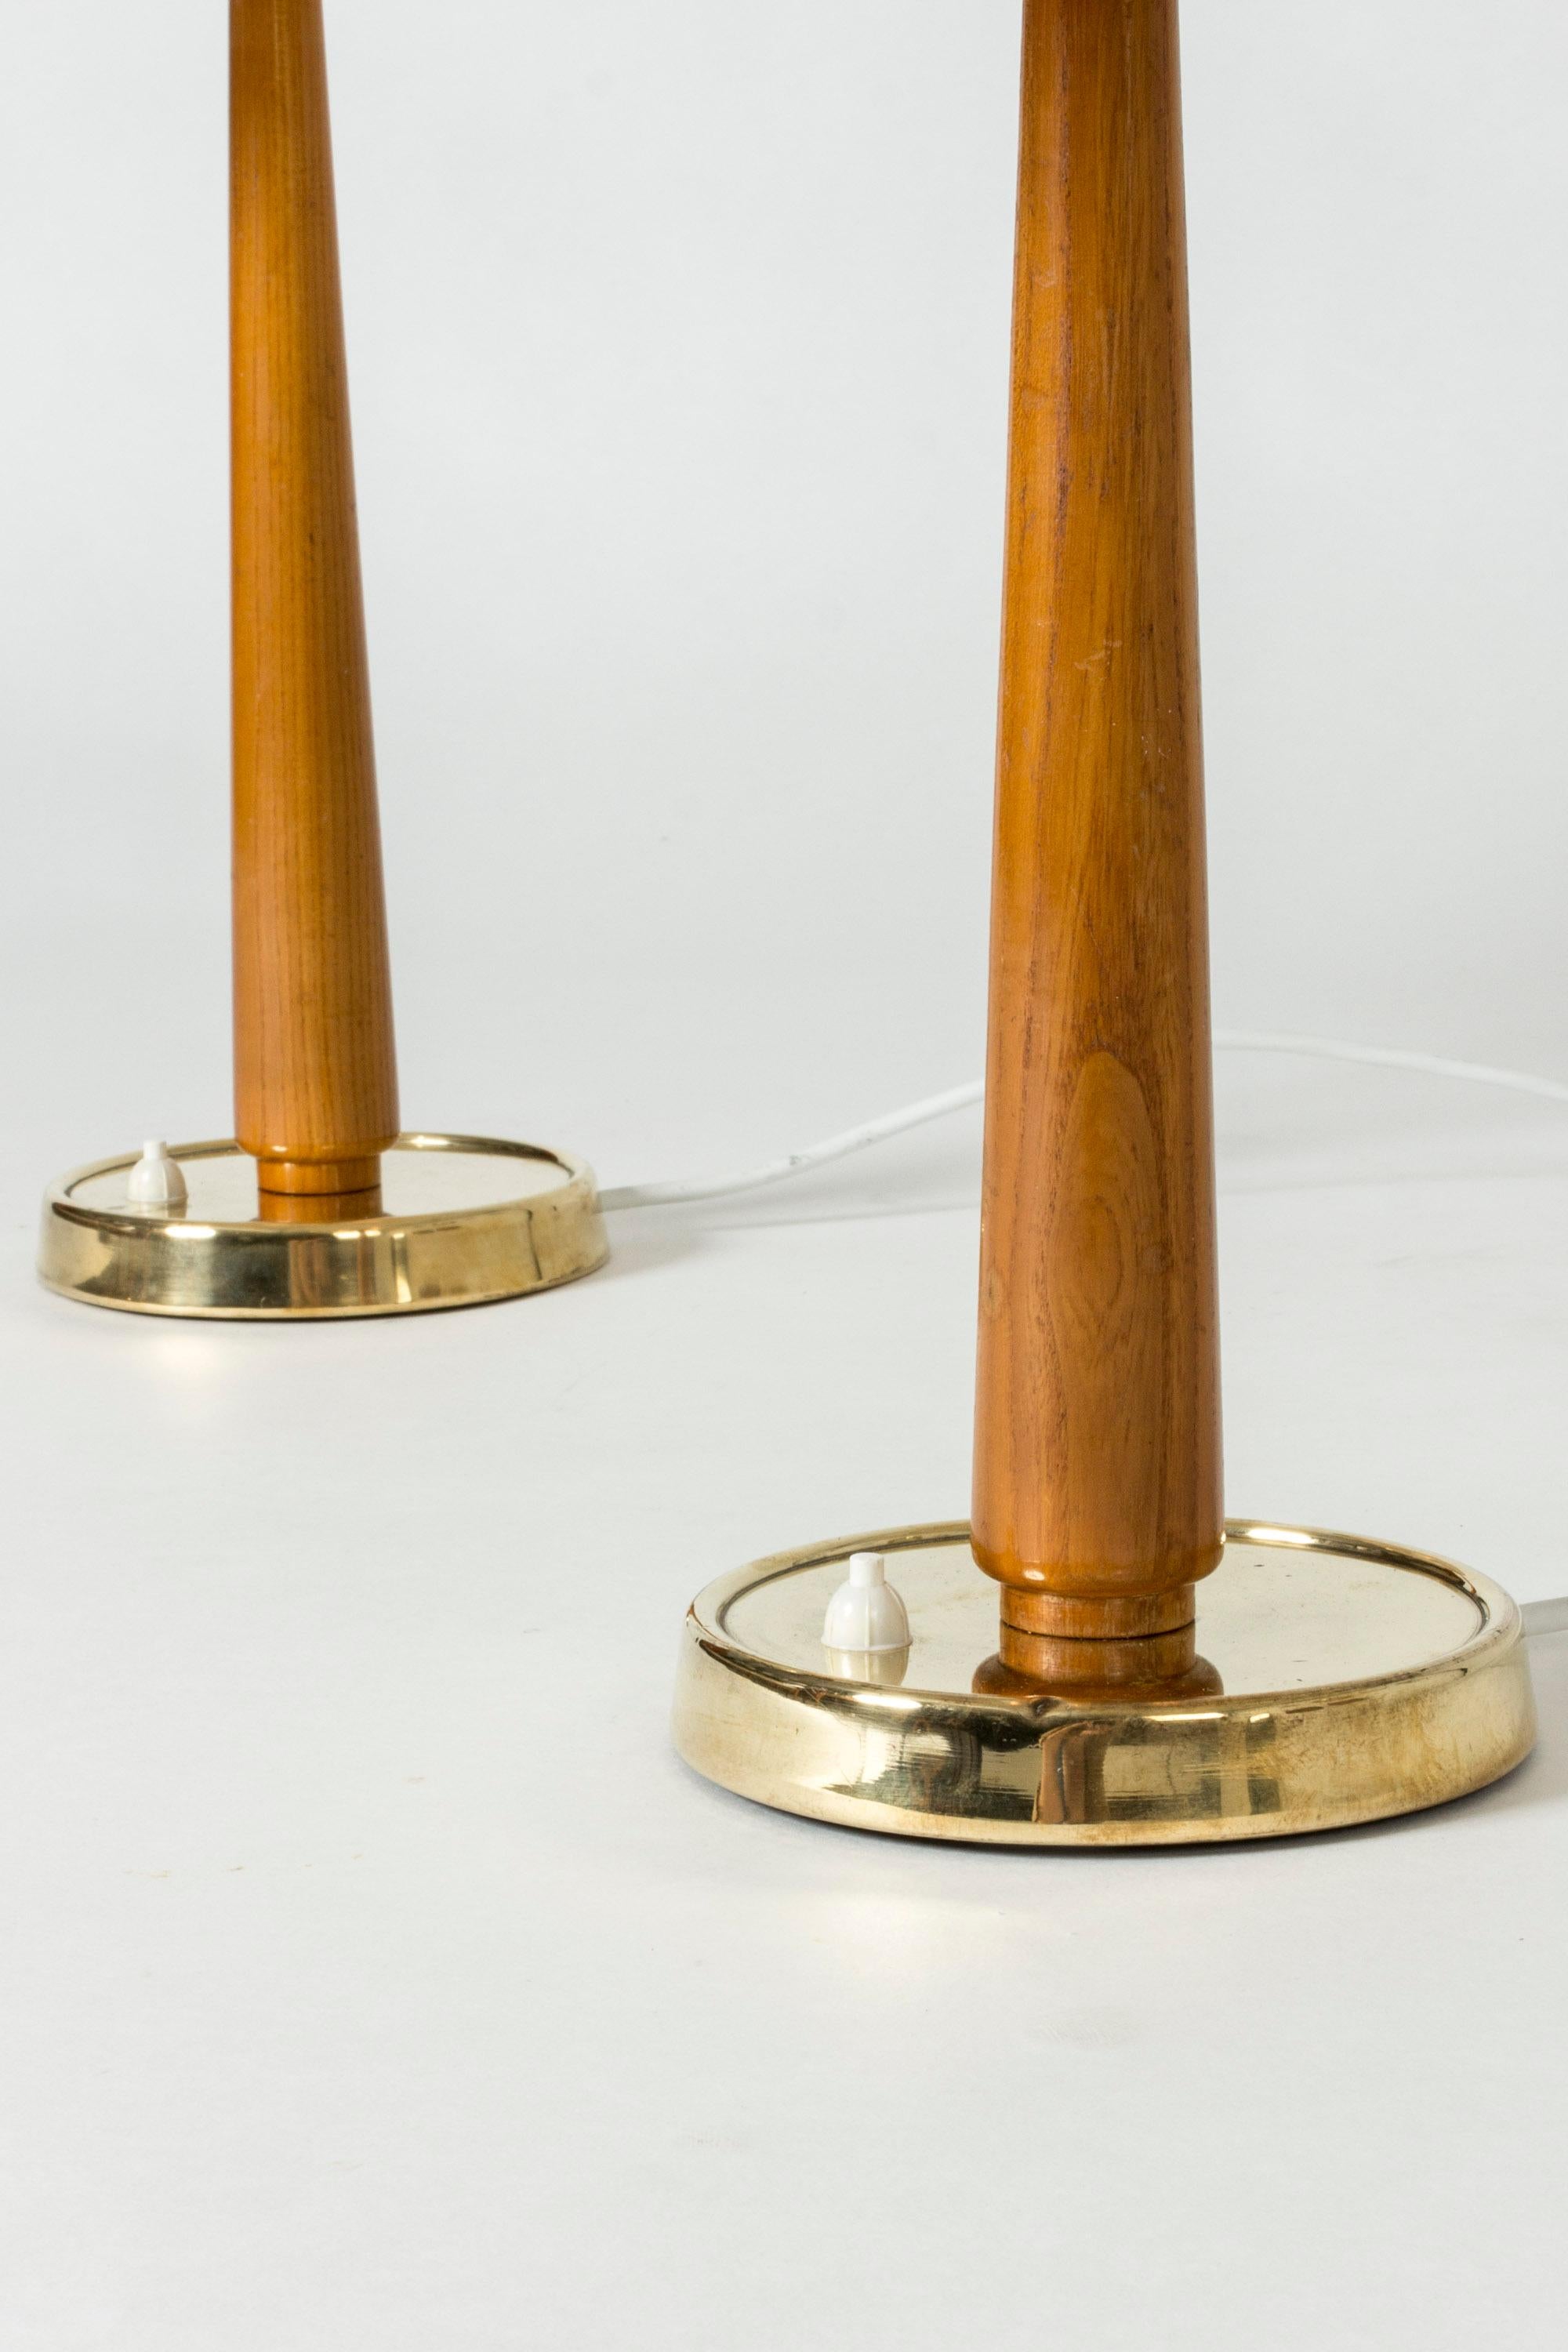 Pair of Swedish Modern Brass and Wood Table Lamps from Nordiska Kompaniet 1